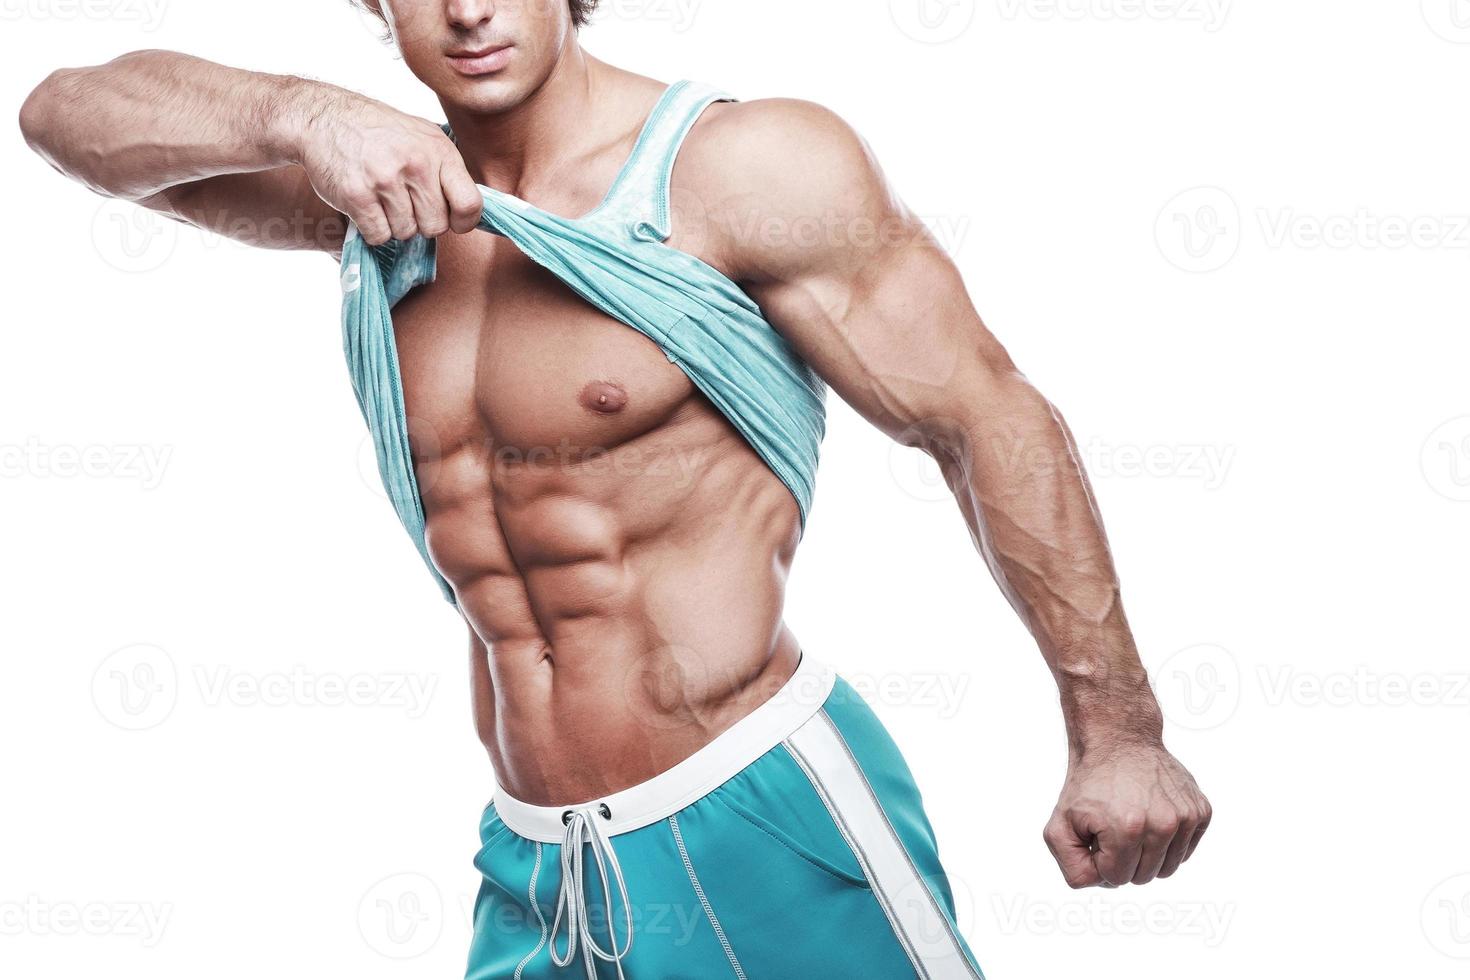 torso masculino desfiado com peito musculoso e abdominais foto